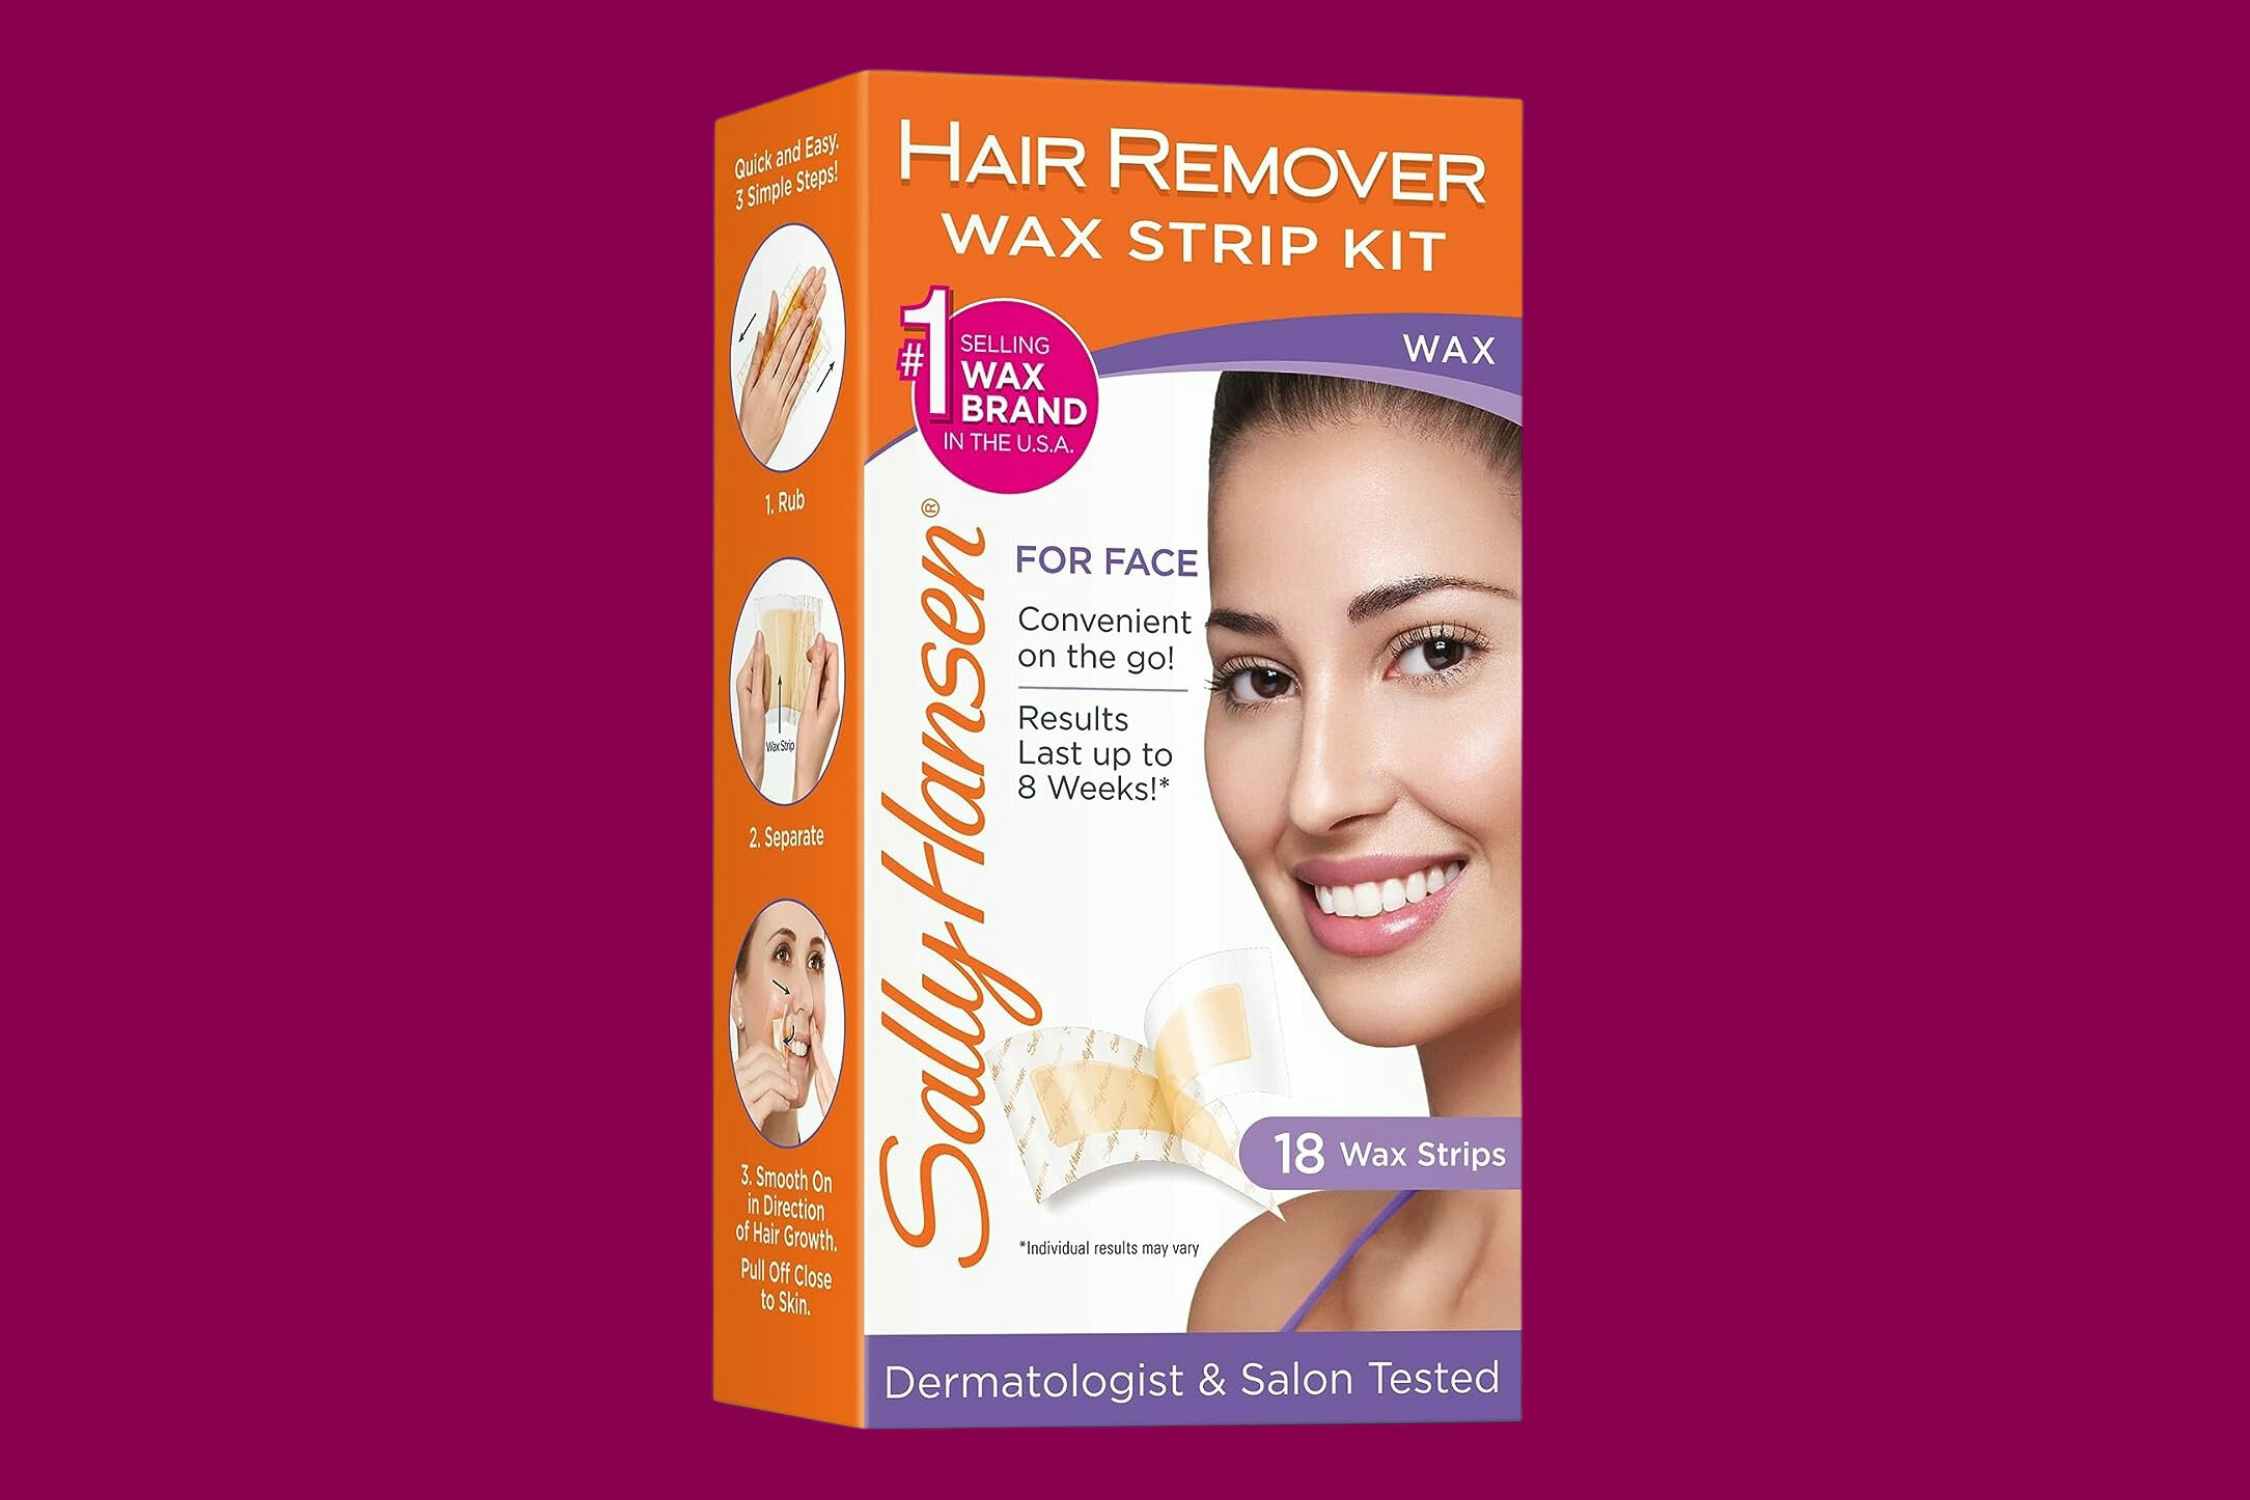 Sally Hansen Wax Removal Strip Kit, as Low as $2.54 on Amazon